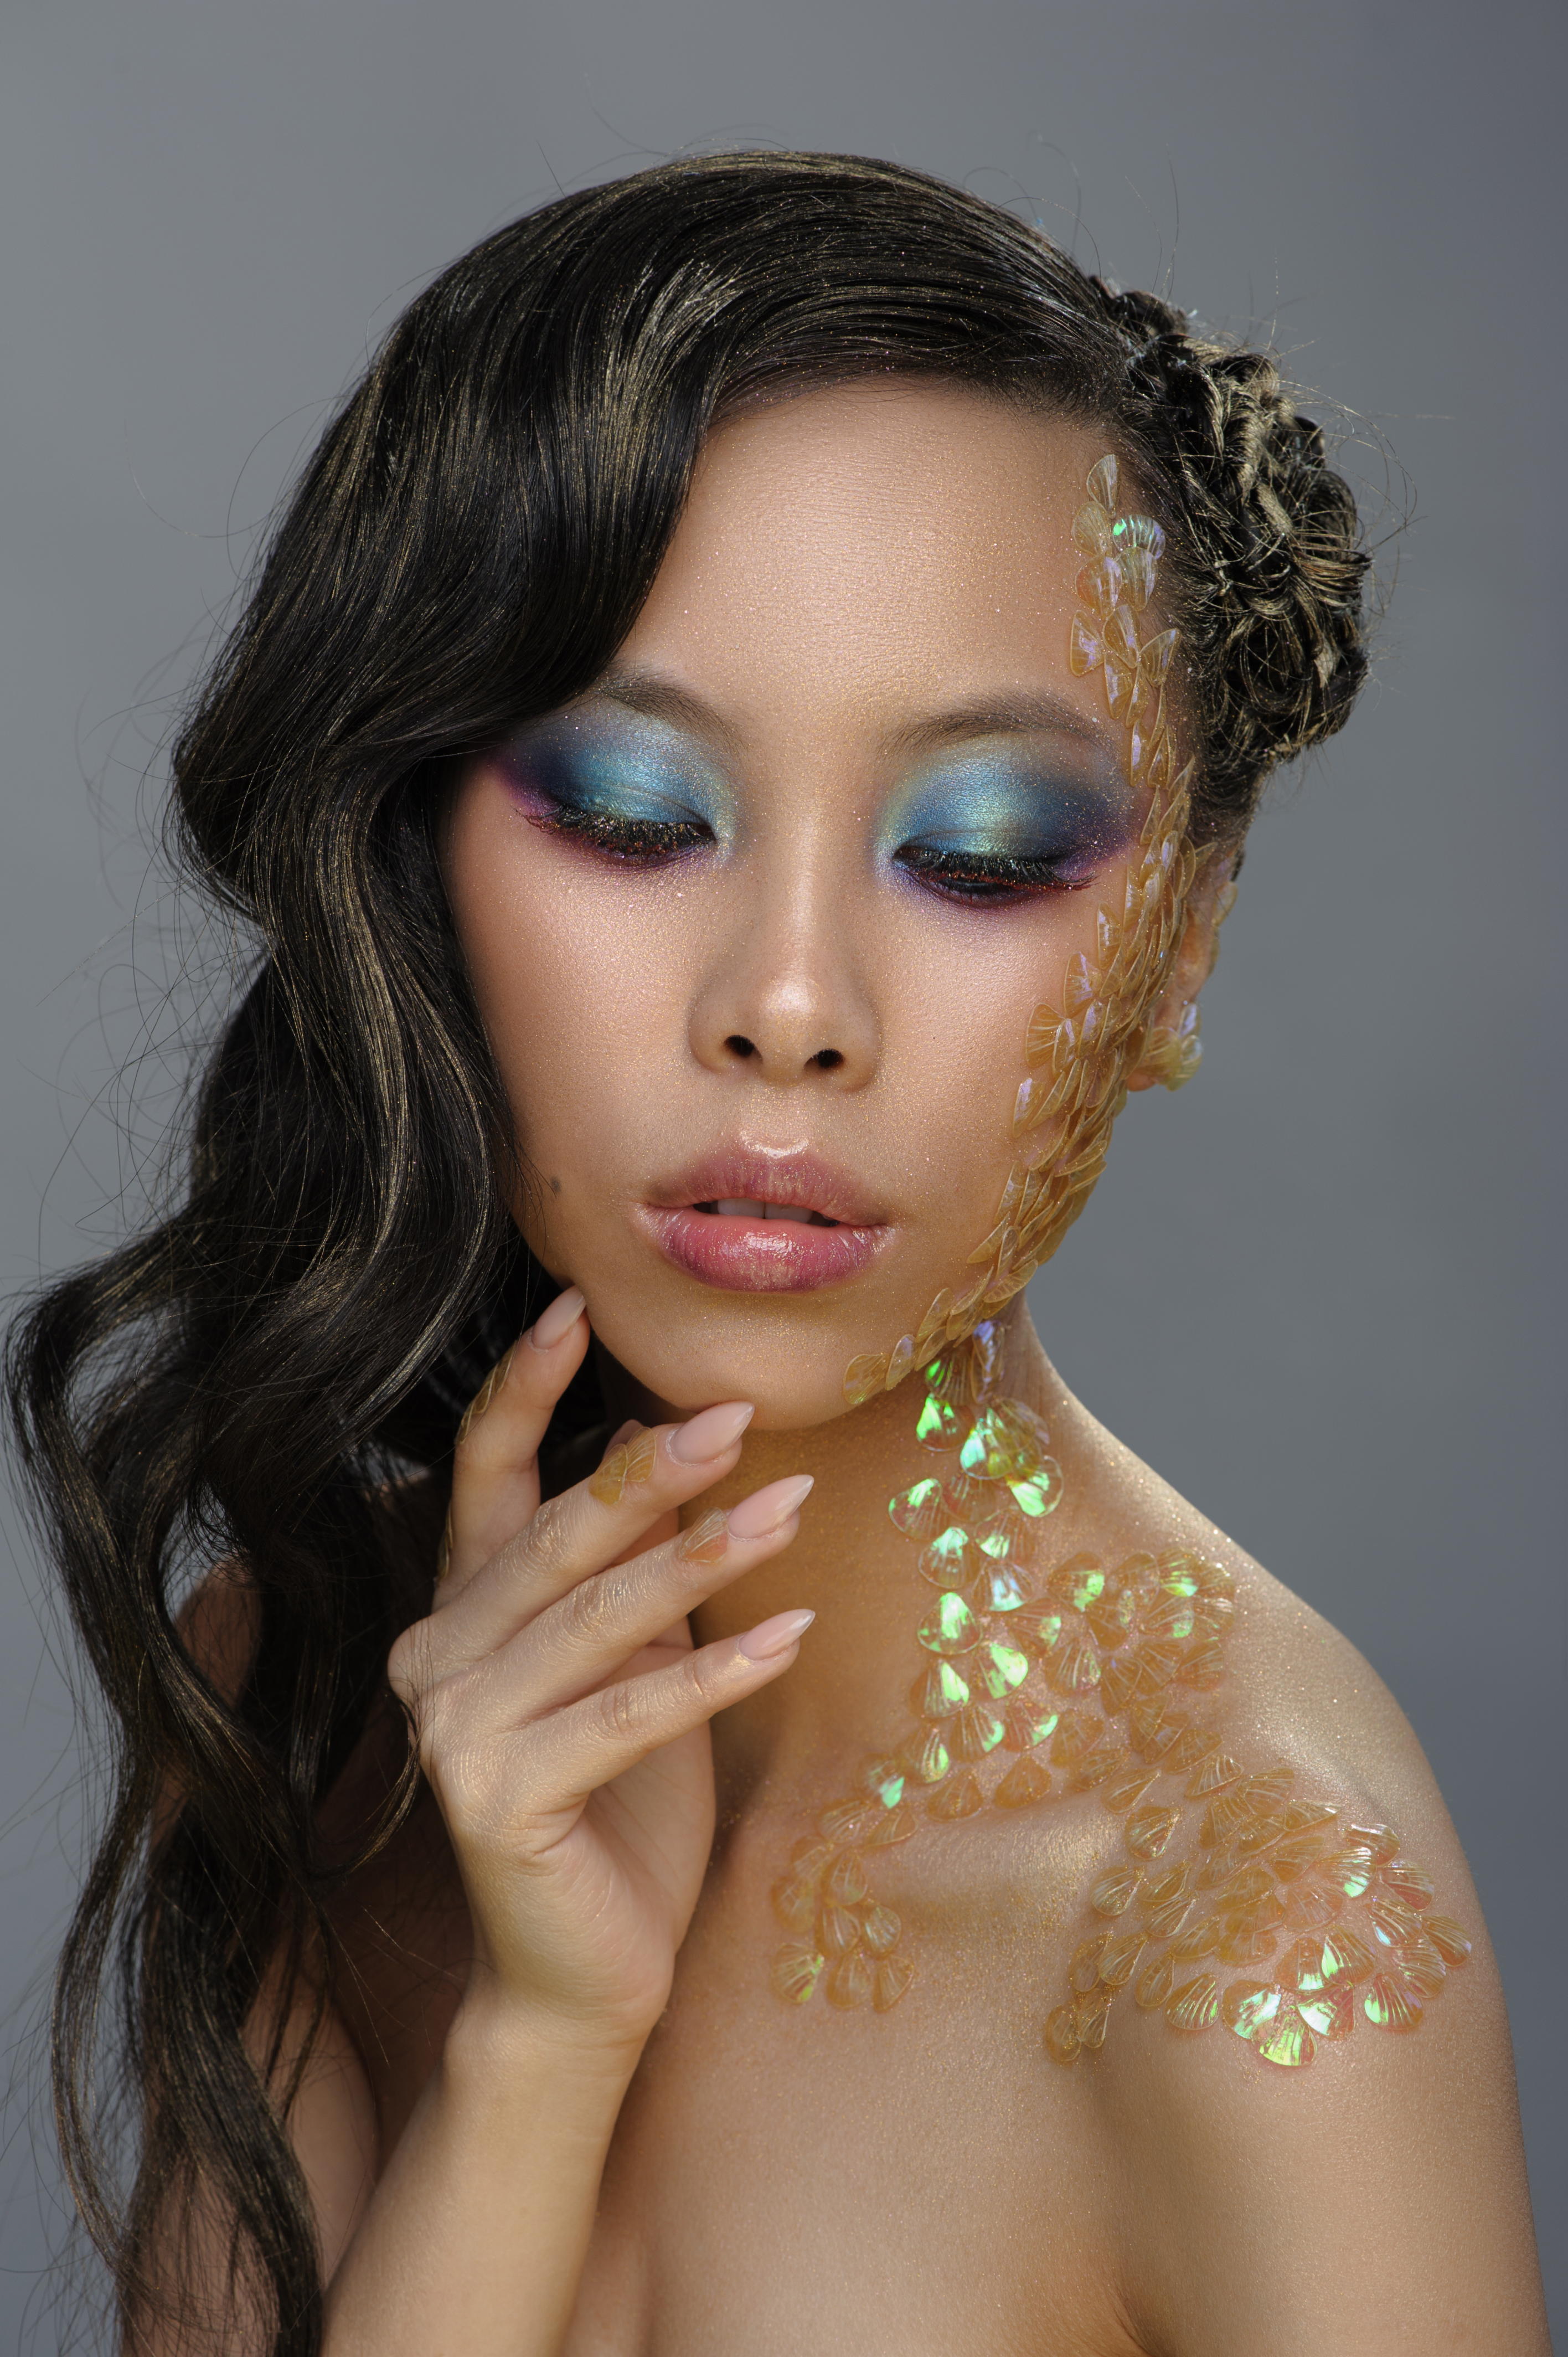 Dark Mermaid-inspired makeup. | Source: Shutterstock